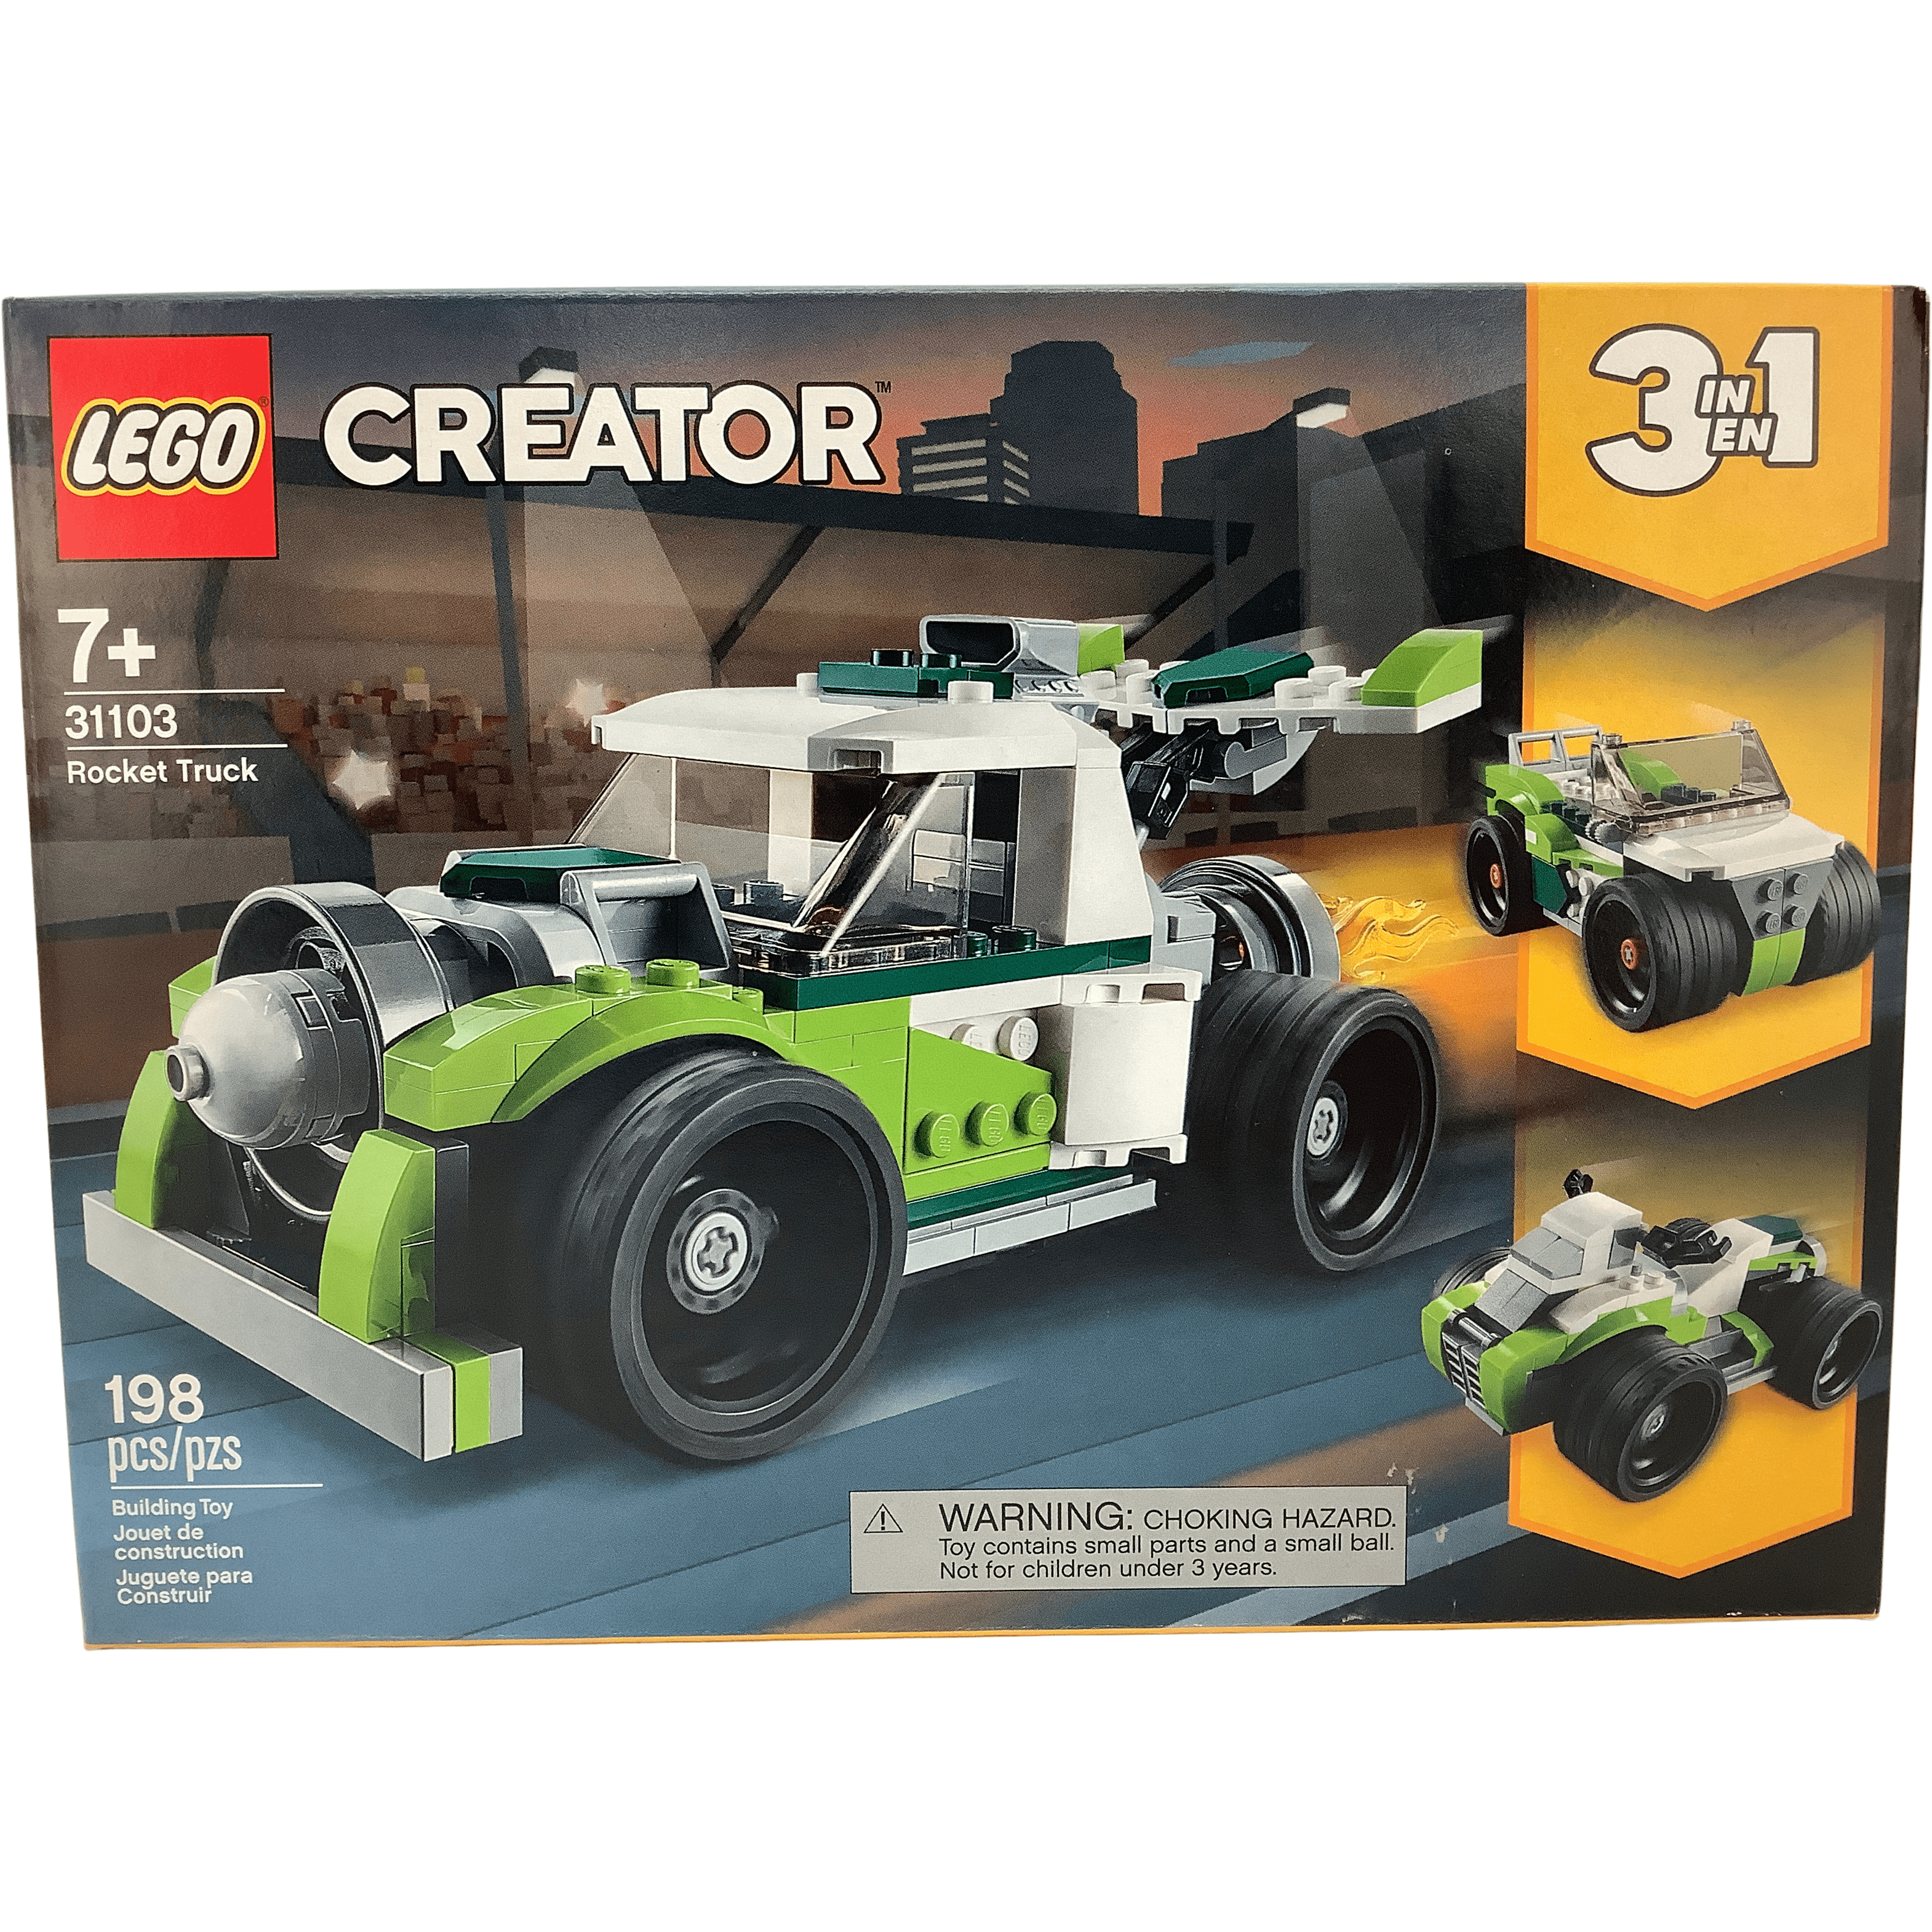 Lego Creator Rocket Truck Building Set / 31103 / 198 Pieces / 3 in 1 Building Kit **DEALS**